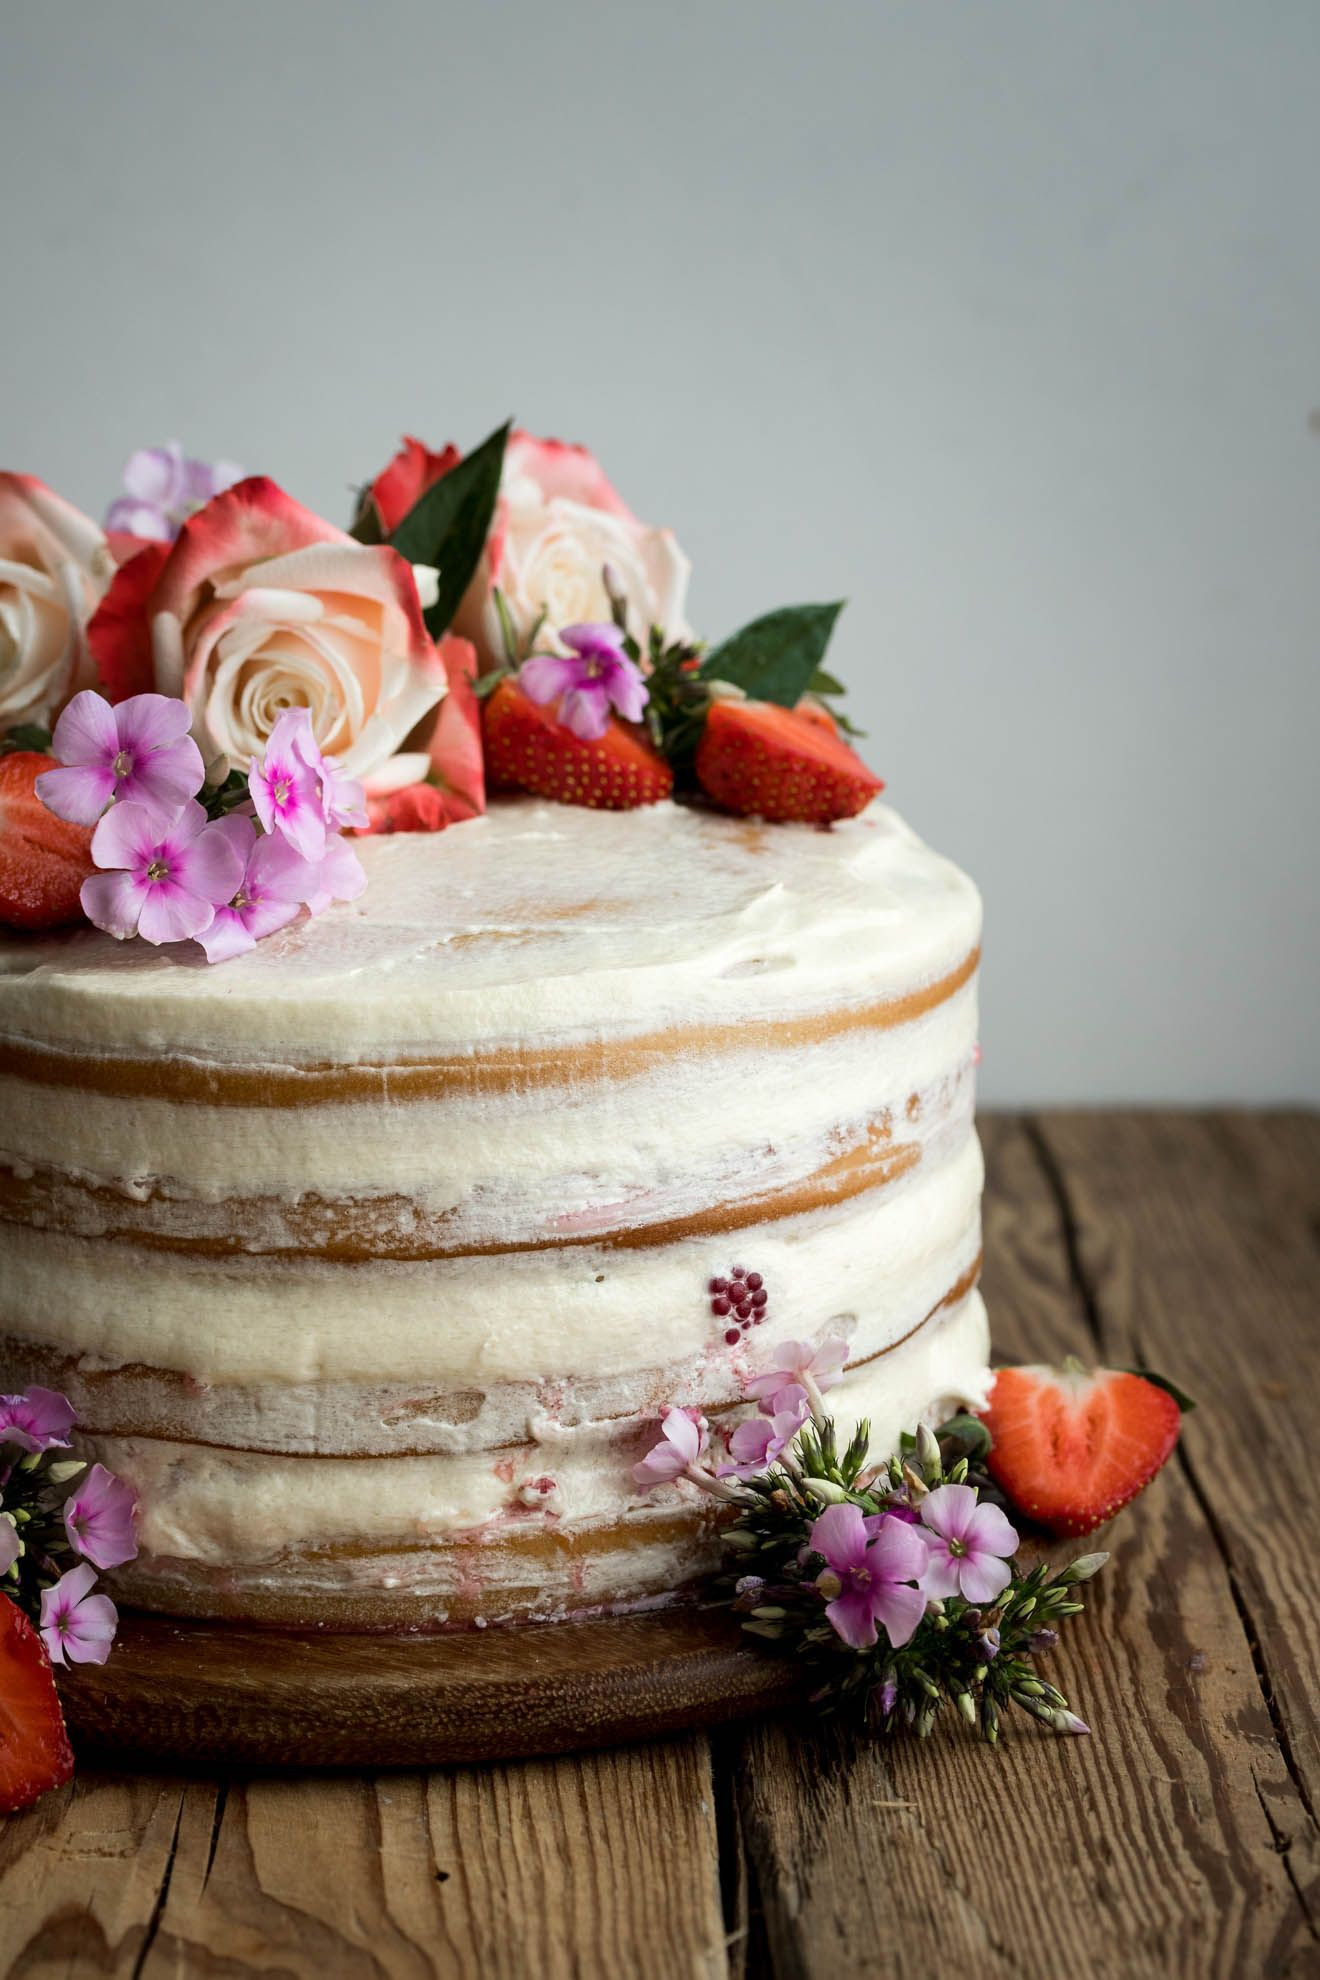 Vegan Wedding Cake Recipes
 Vegan Wedding Cake Recipe